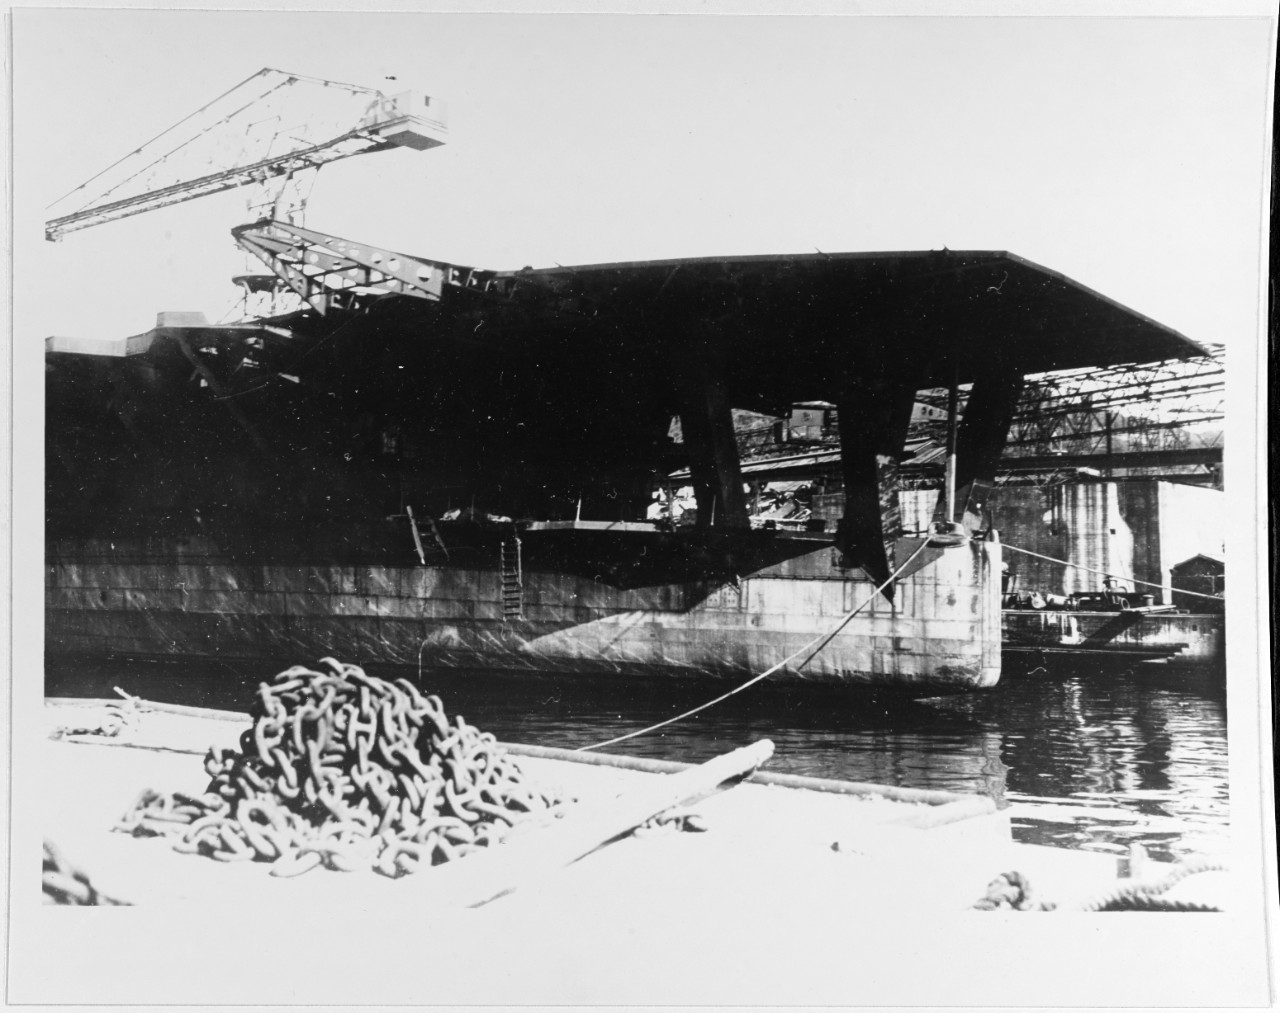 IBUKI (Japanese aircraft carrier, 1943-1947)